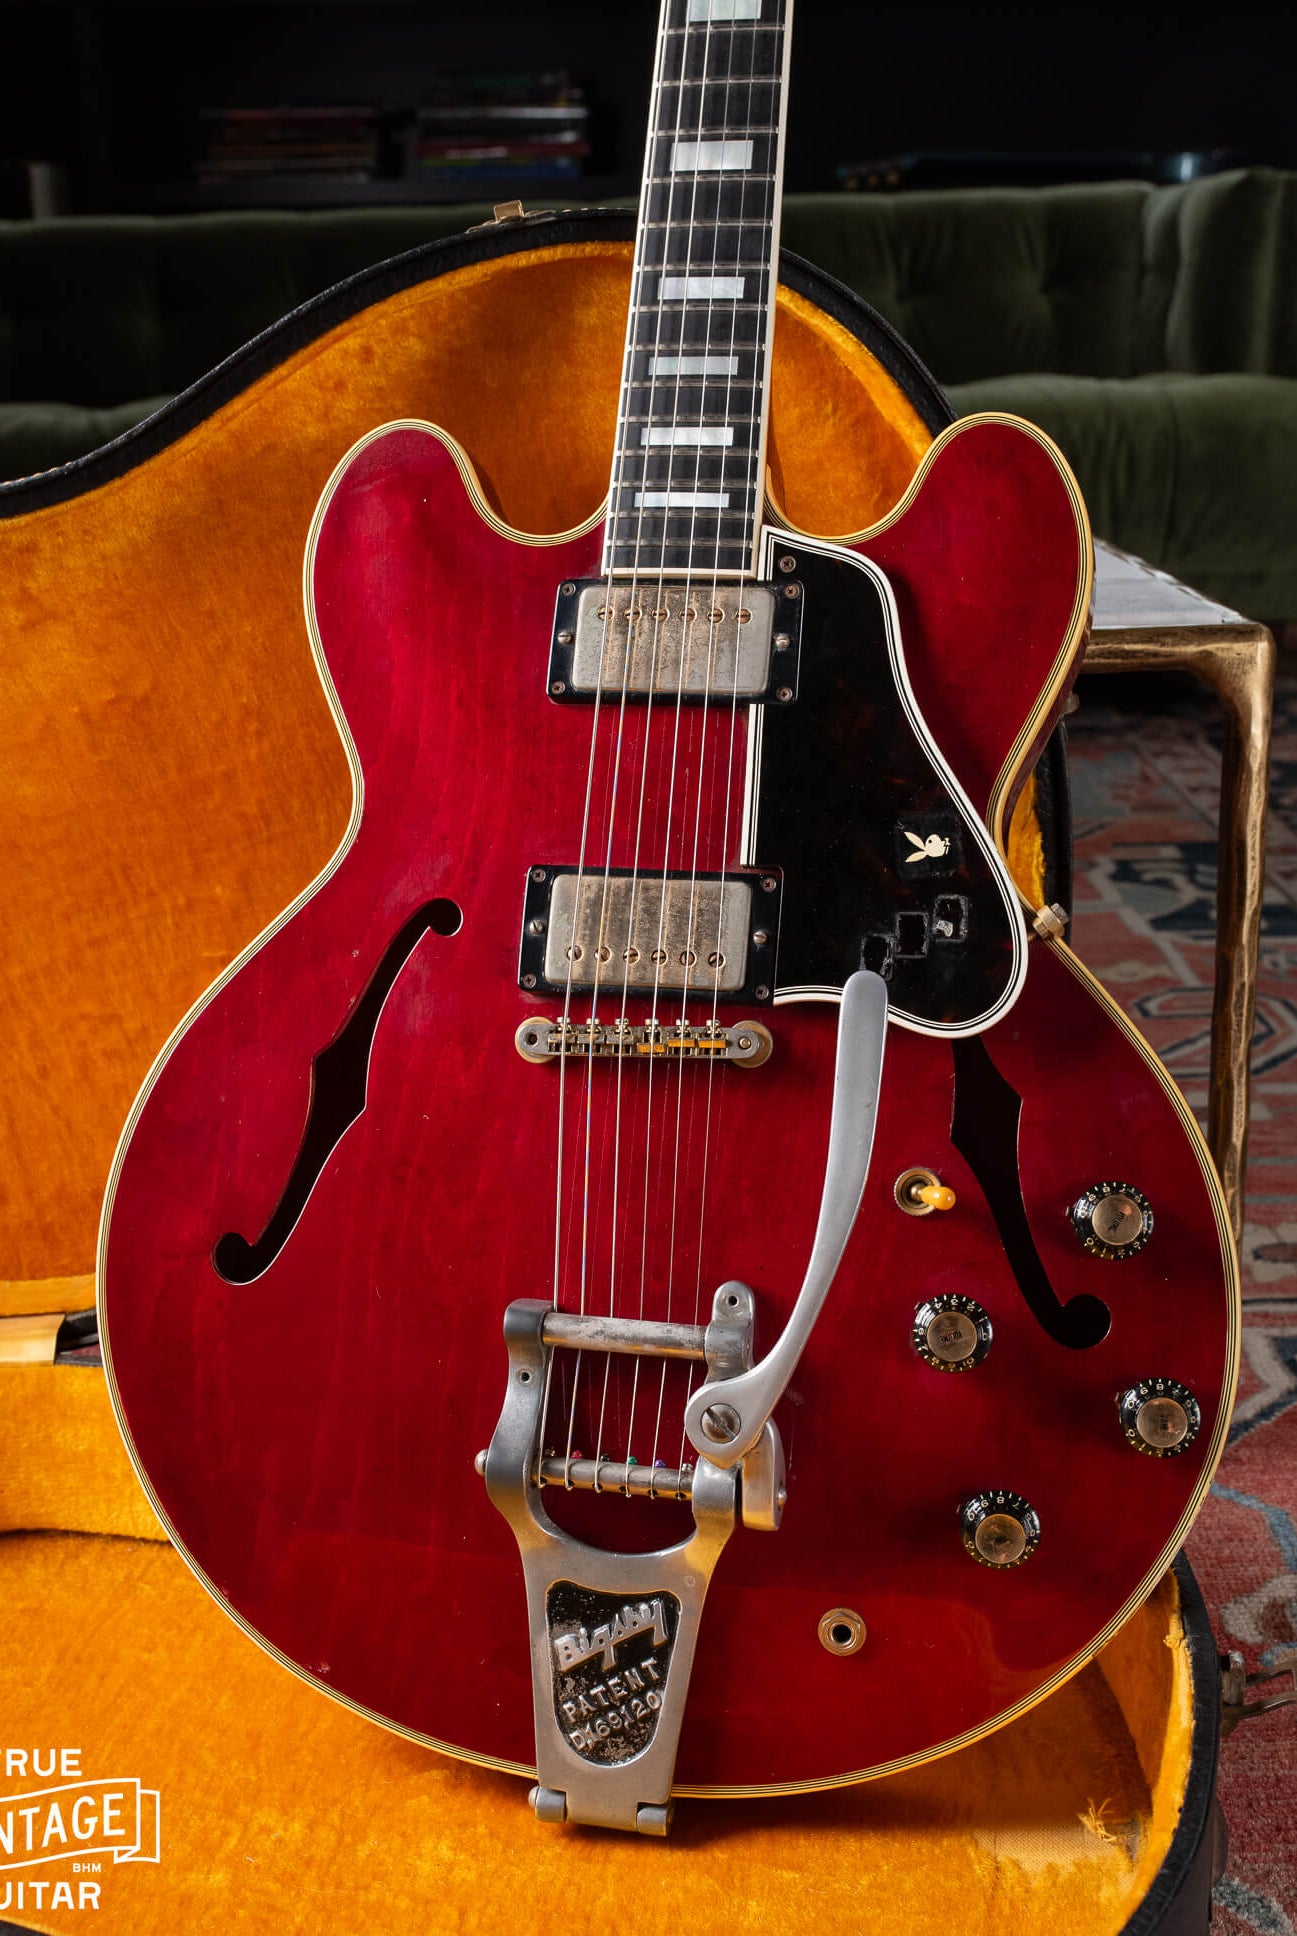 Video of a vintage Gibson ES-355 Mono guitar